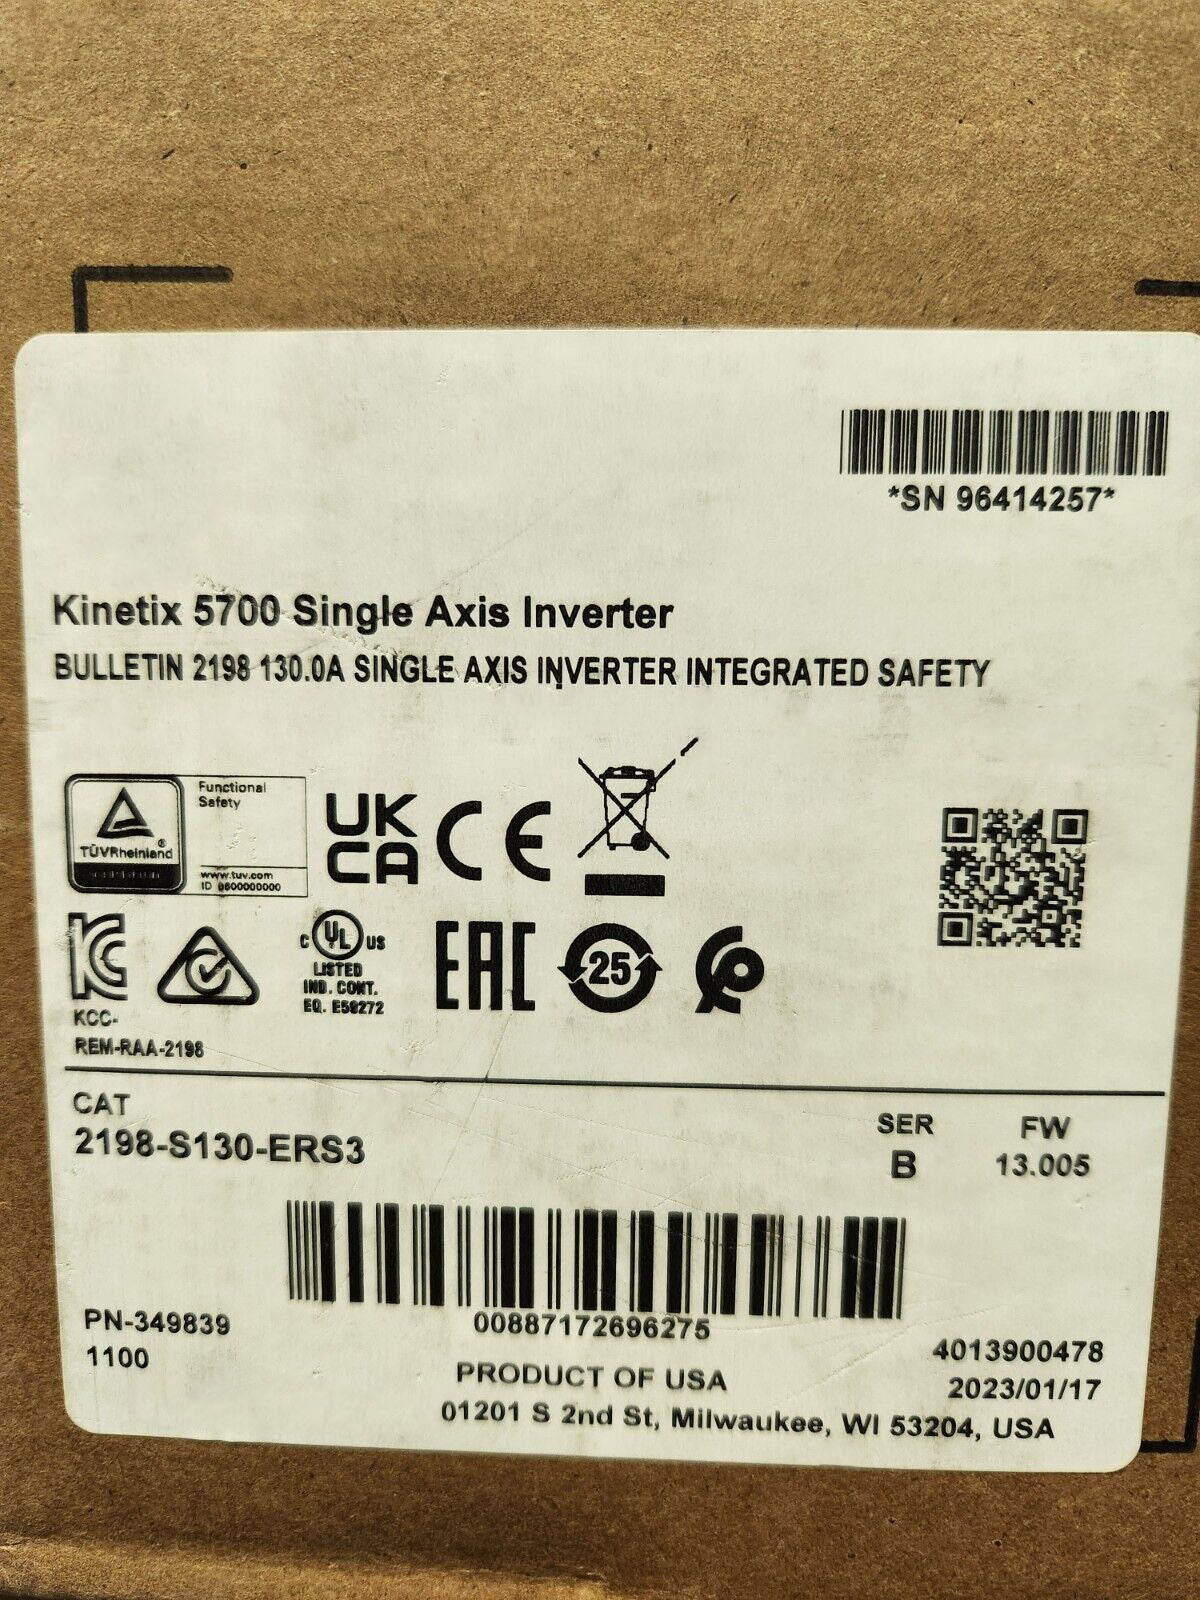 New Allen Bradley 2198-S130-ERS3 Kinetix 5700 Single Axis Inverter BULLETIN 2198 130.0A SINGLE AXIS INVERTER INTEGRATED SAFETY